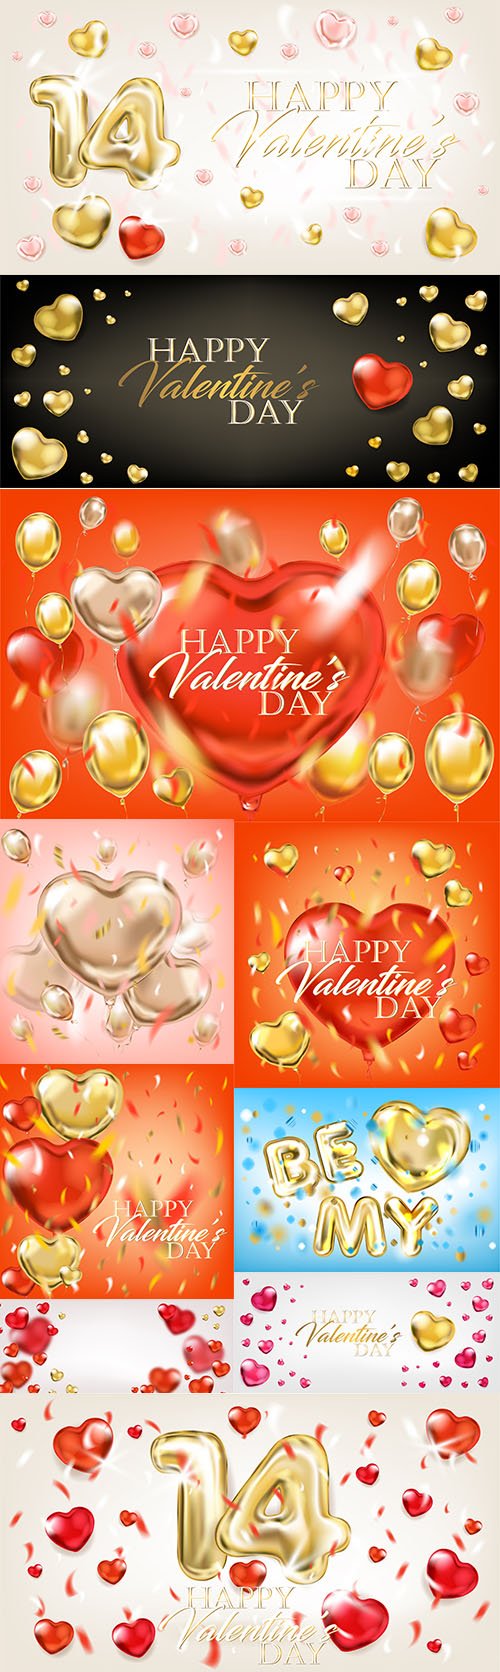 Happy Valentines Day Illustrations Premium Vector Set